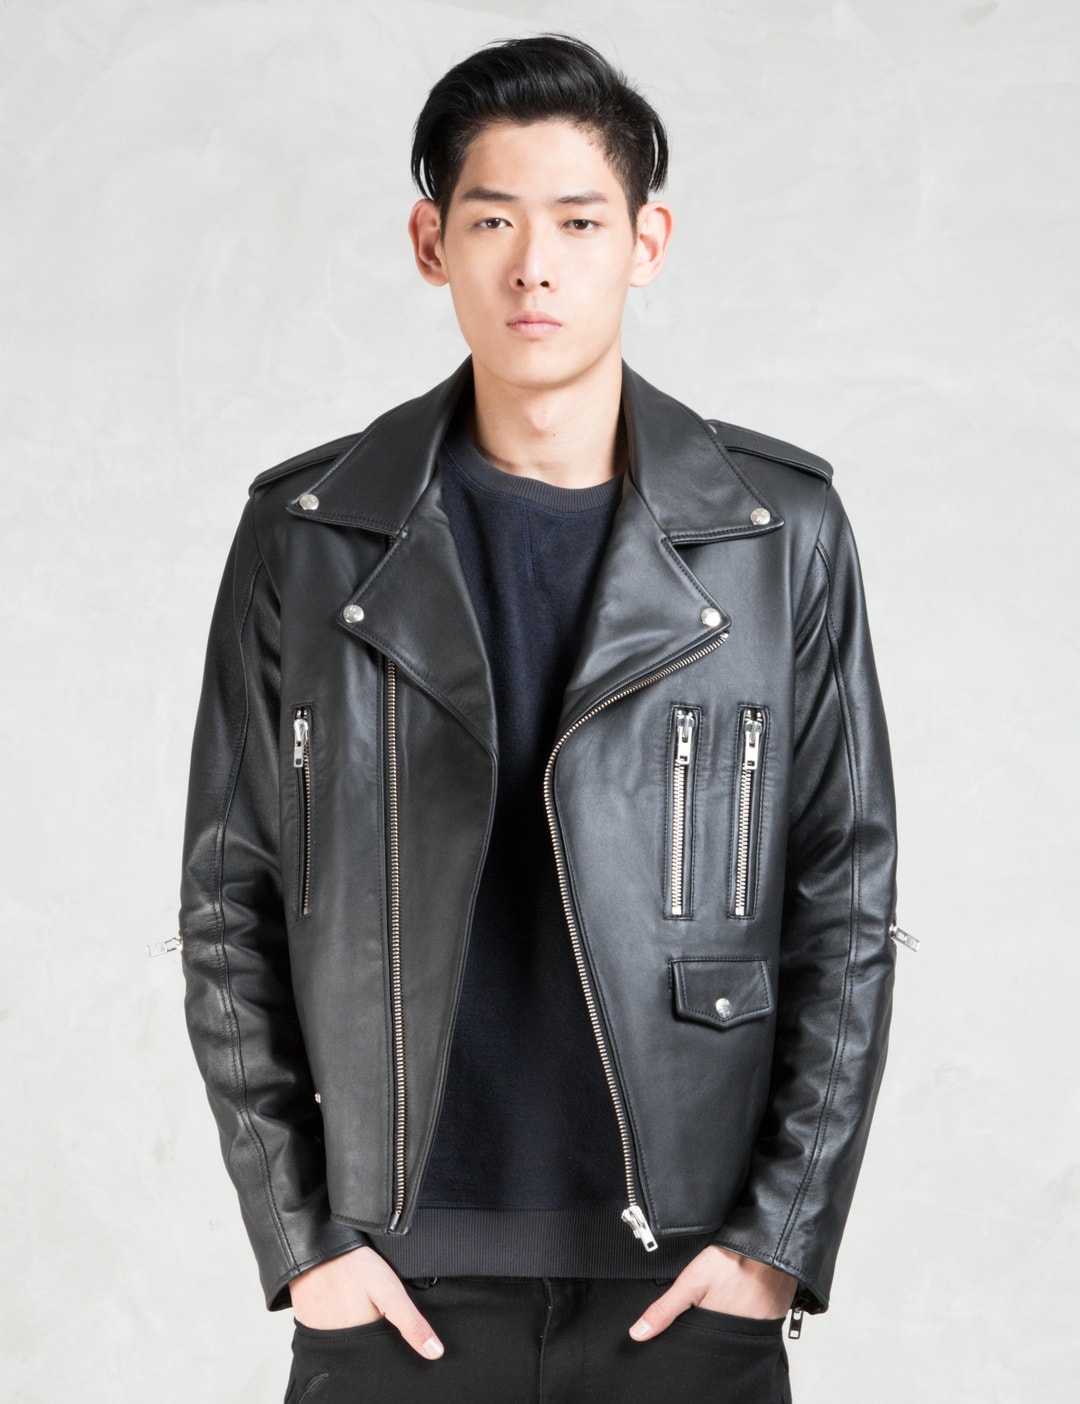 MISBHV Black Monogram Leather Jacket